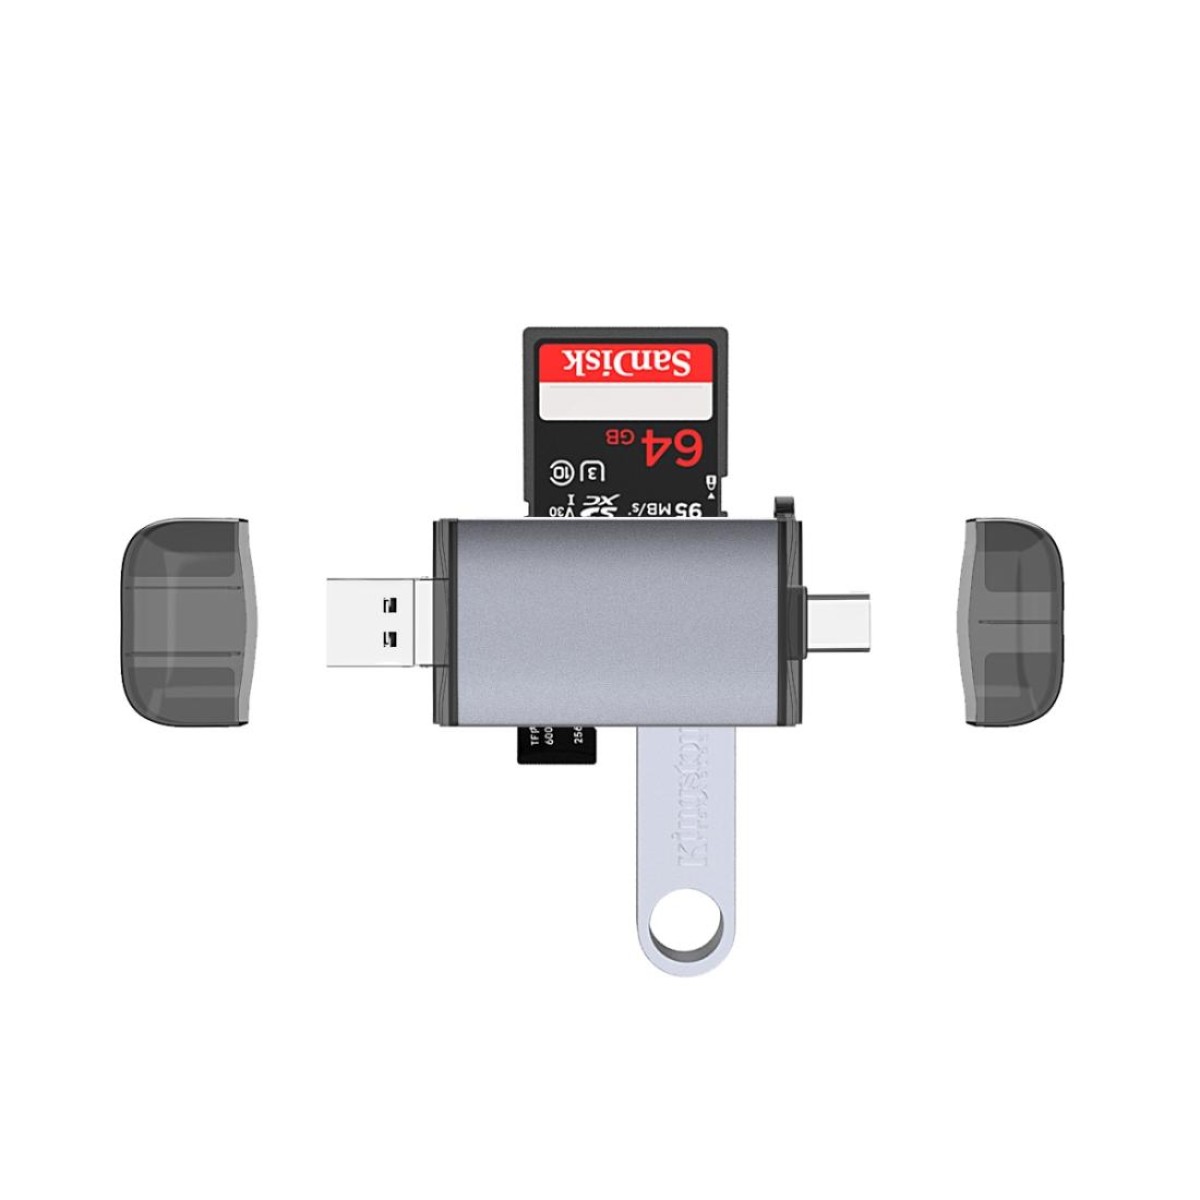 3 in 1 USB-C / Type-C + USB 2.0 + Micro USB Multifunction OTG  Card Reader